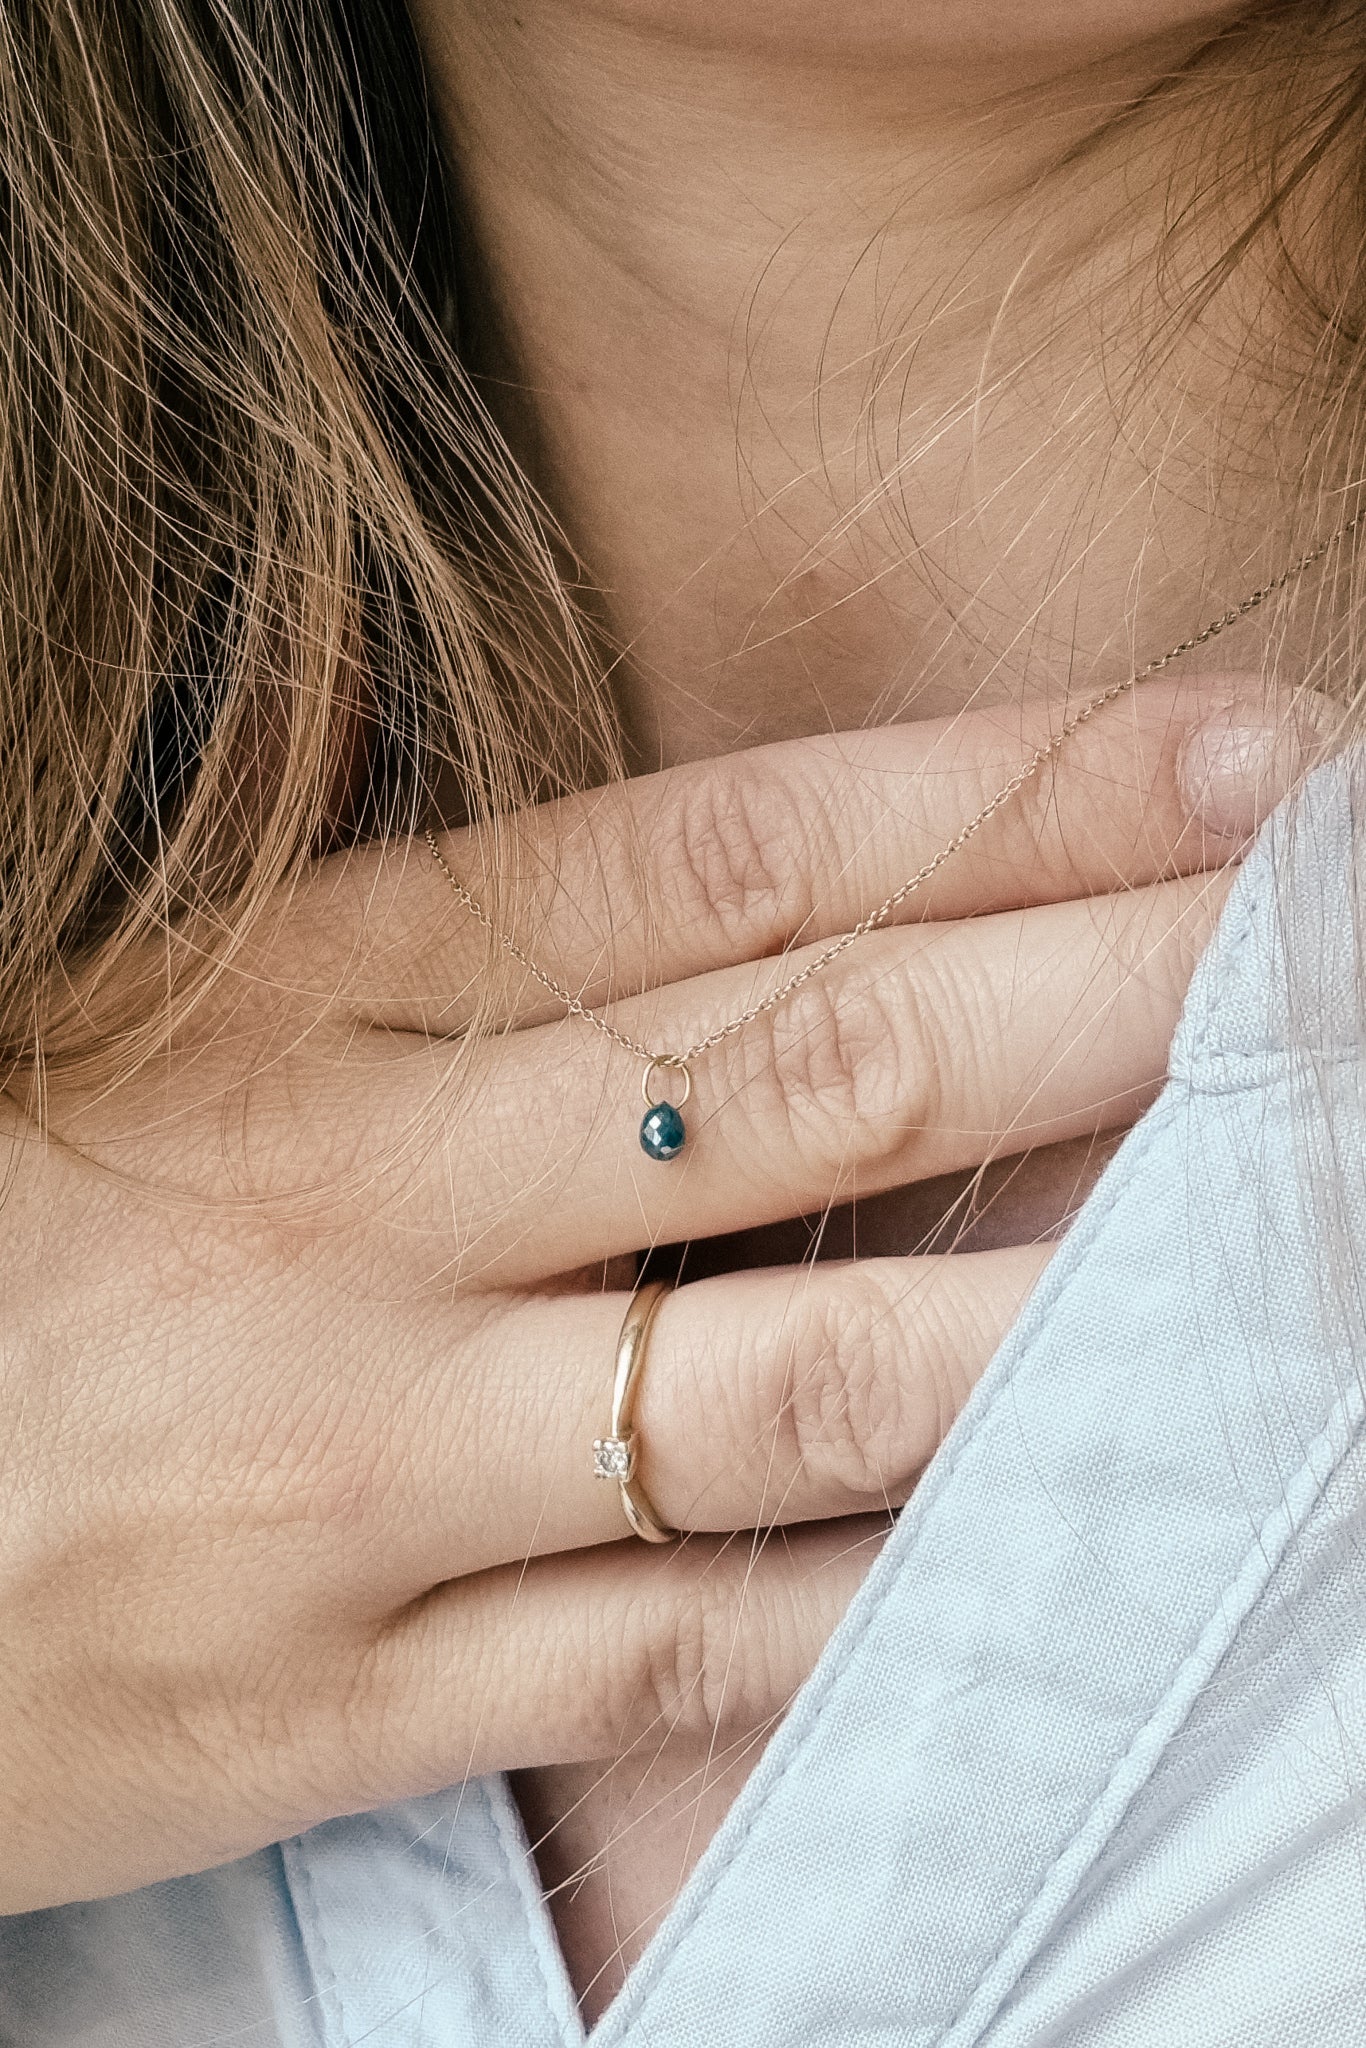 The third eye chakra | Indigo blue briolette diamond in 18k gold chain